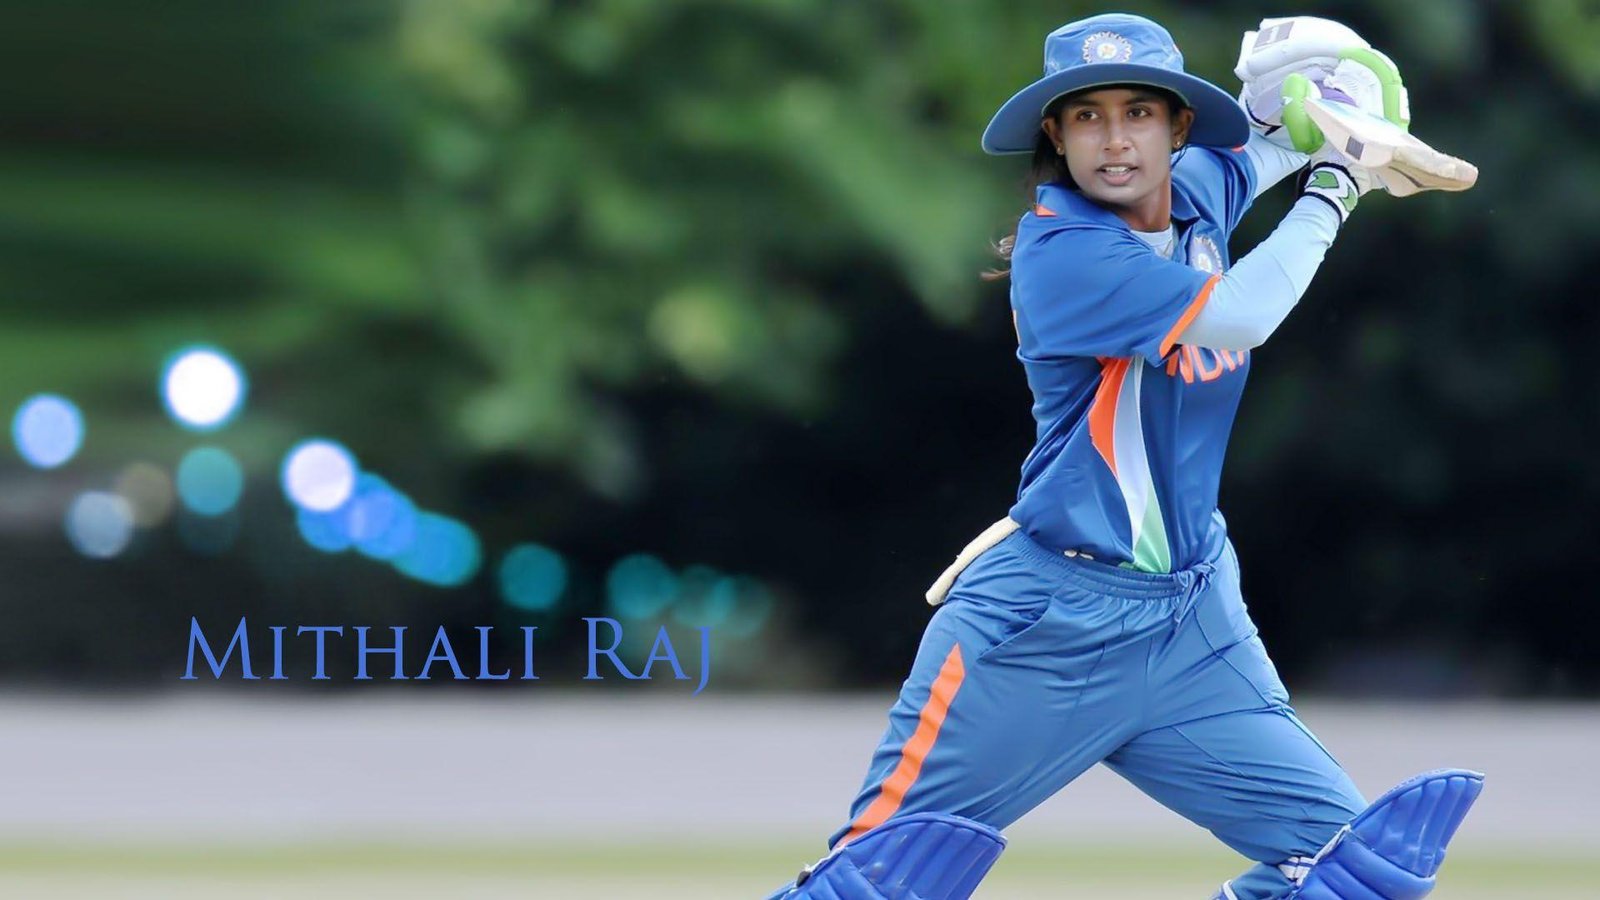 The Inspiring Journey of Cricketer Mithali Raj